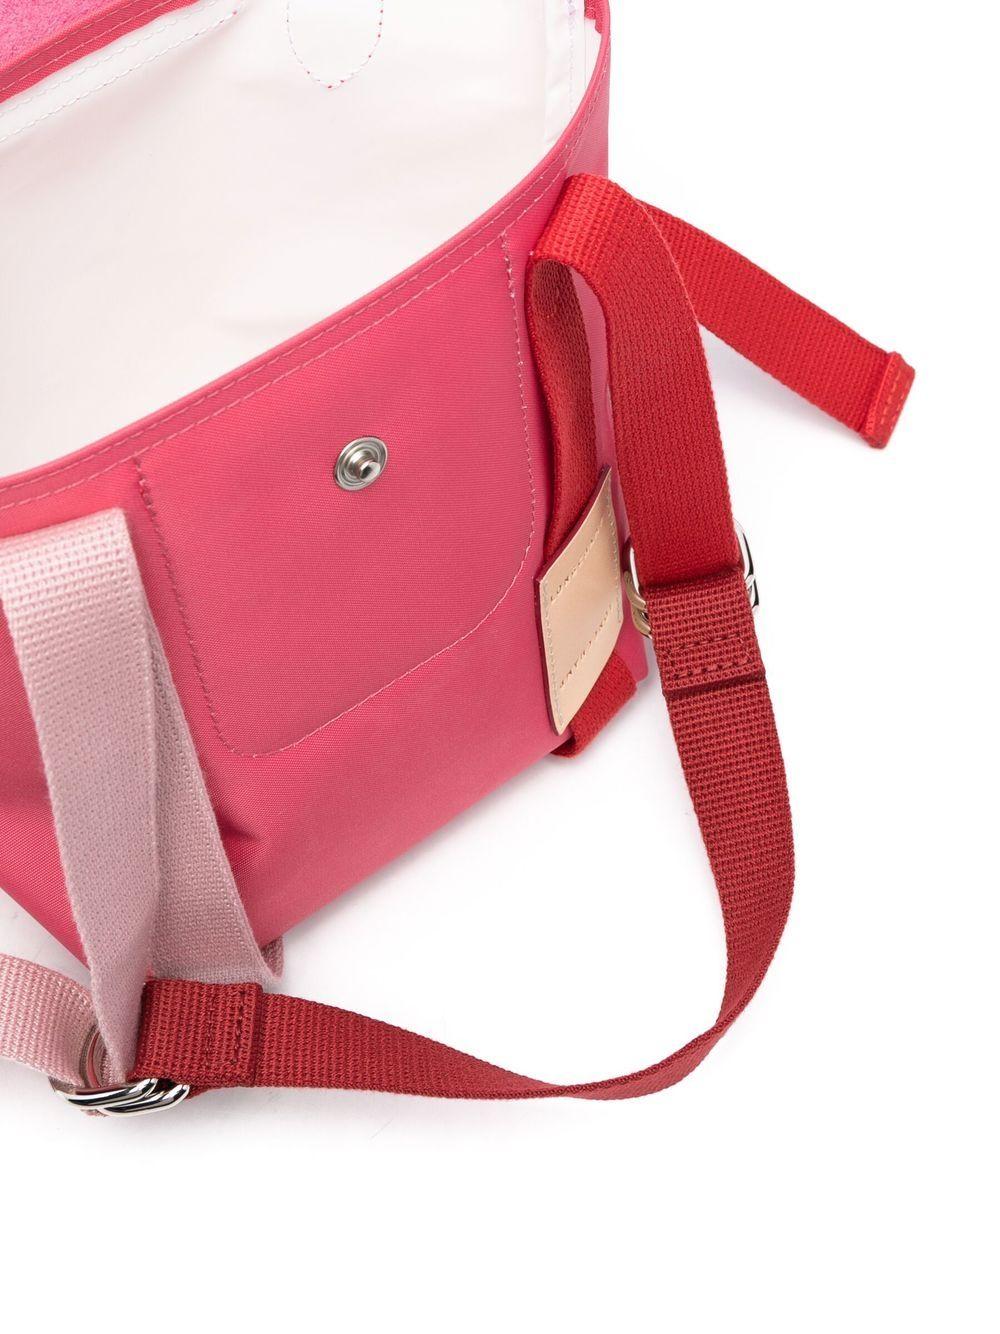 Longchamp Le Pliage Small Re-Play Tote Bag Carotte – Balilene